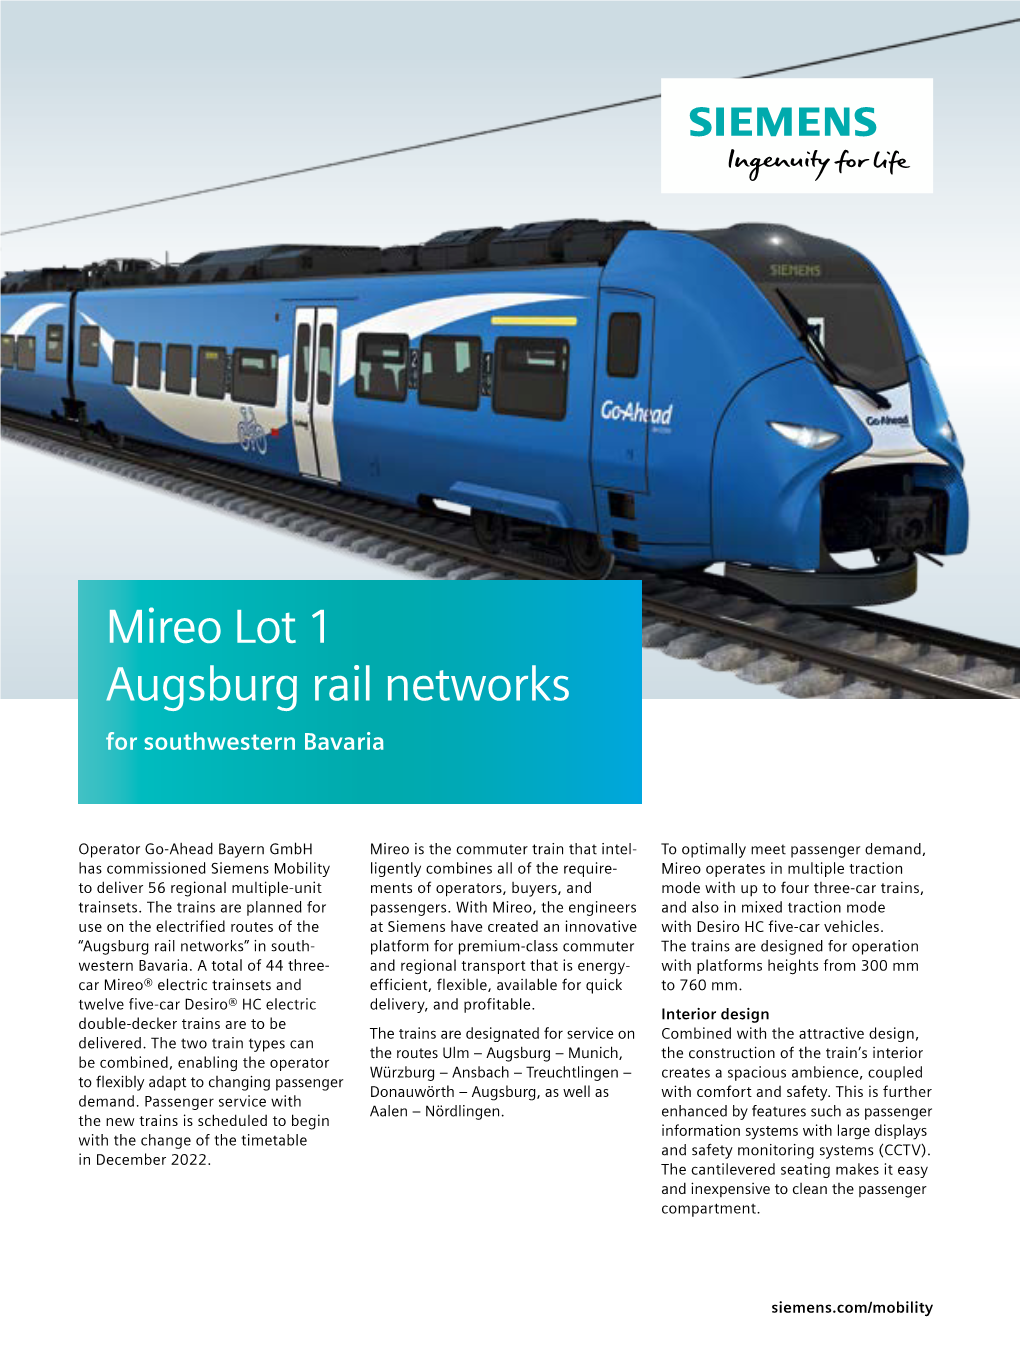 Mireo Lot 1 Augsburg Rail Networks for Southwestern Bavaria